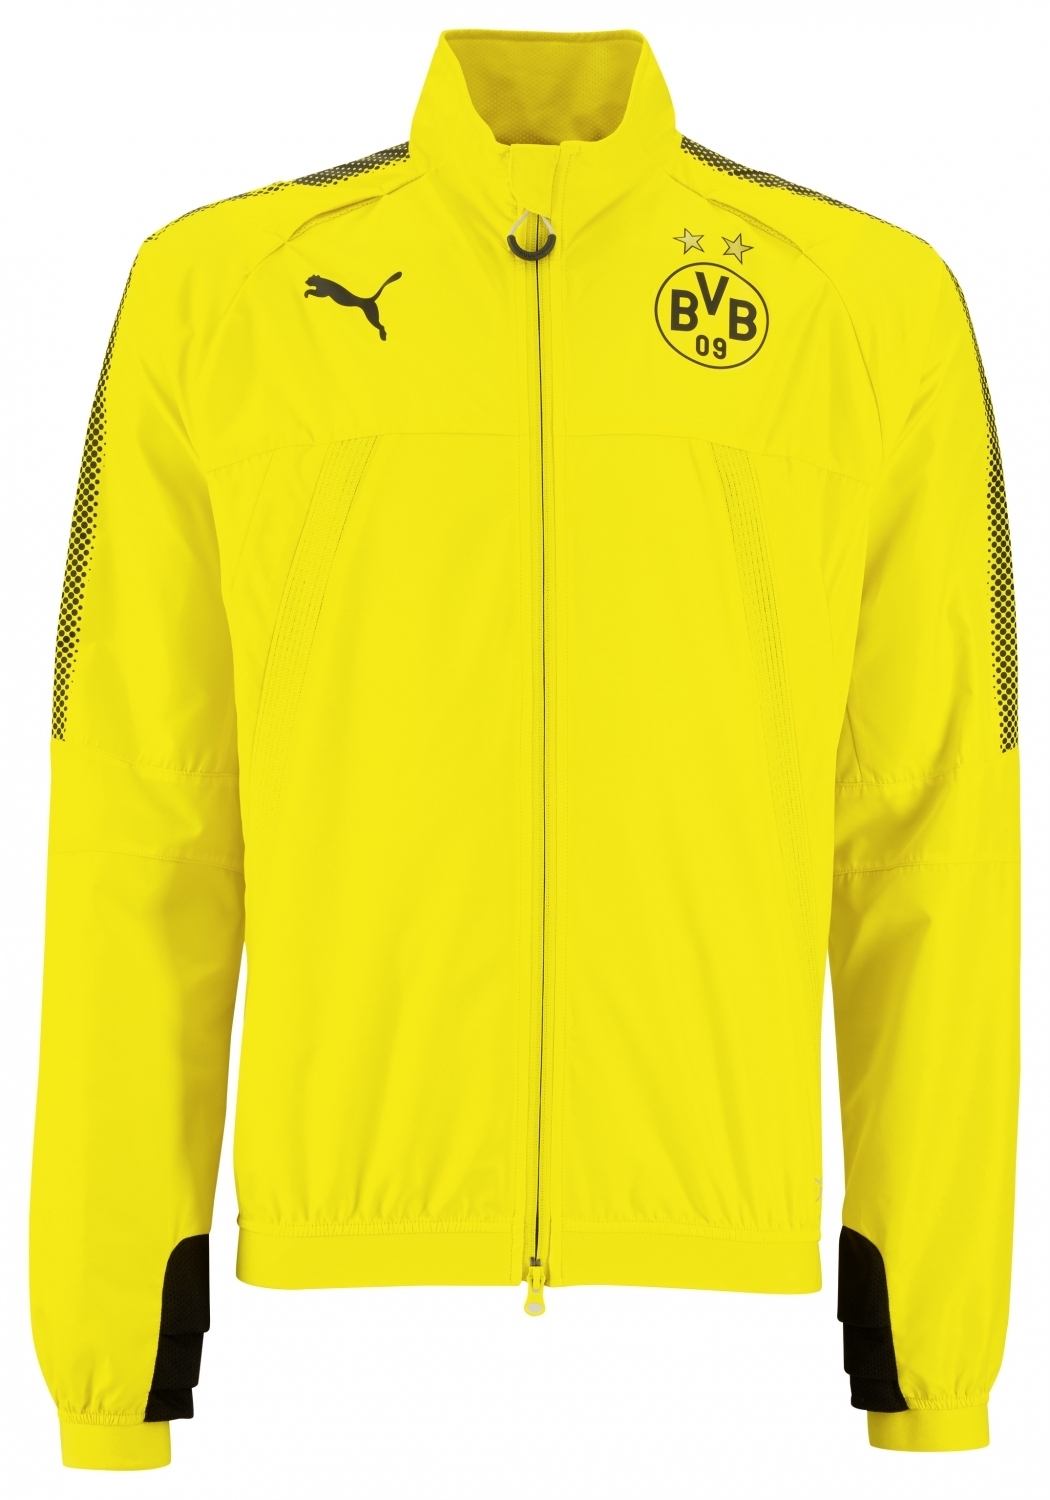 Puma BVB Borussia Dortmund Stadium Herren Jacke gelb